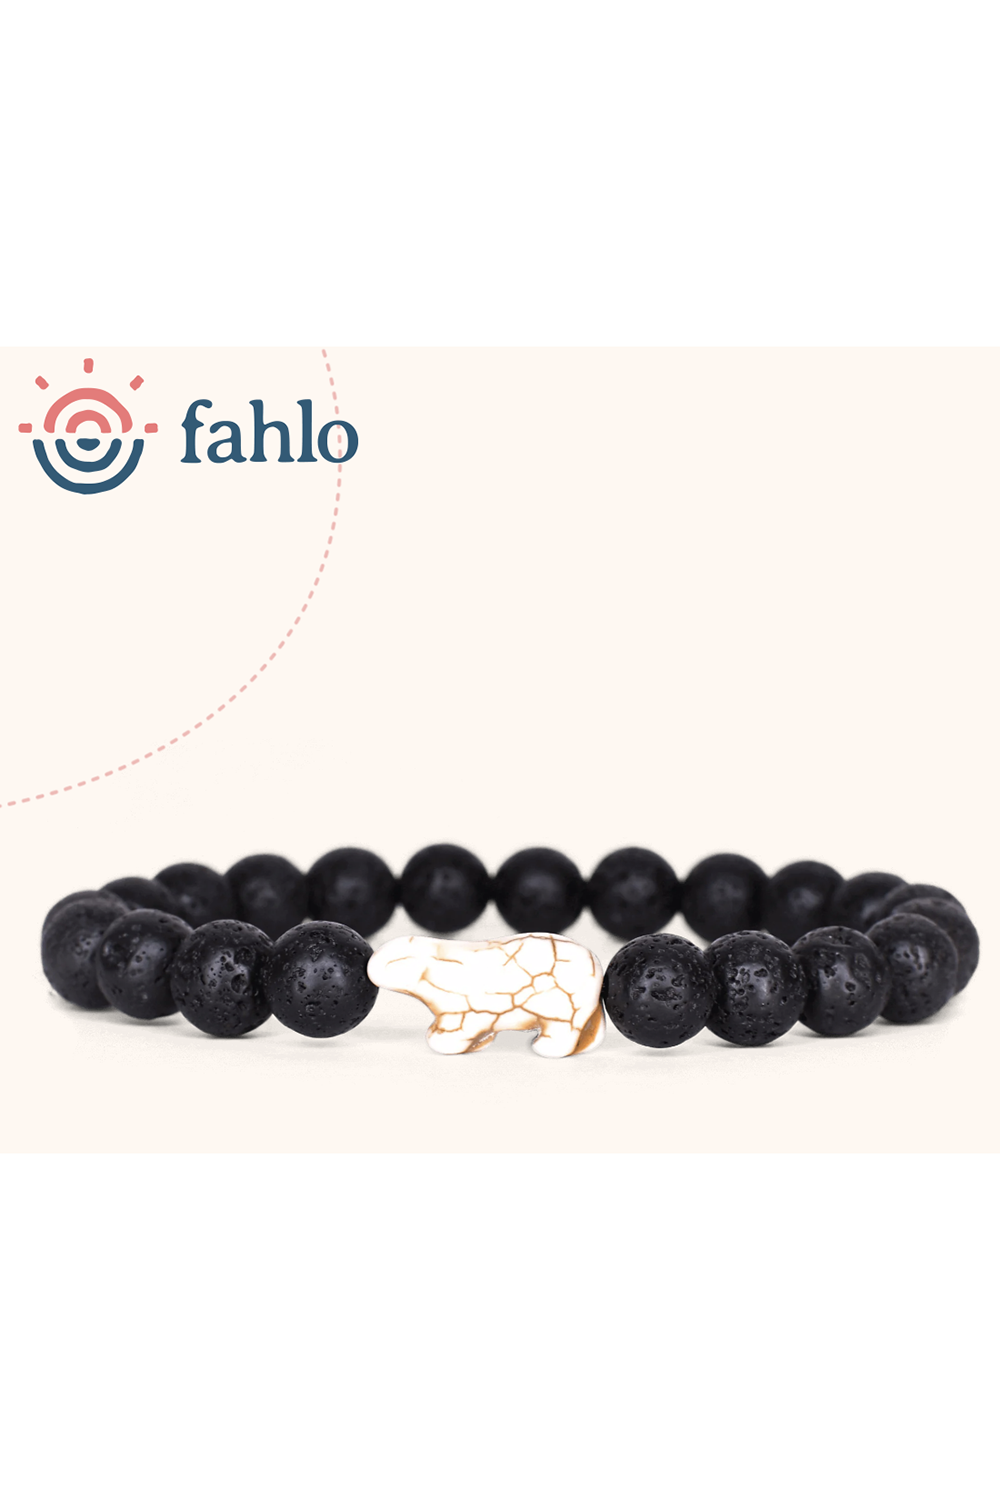 Fahlo Venture Bracelet - Lava Stone